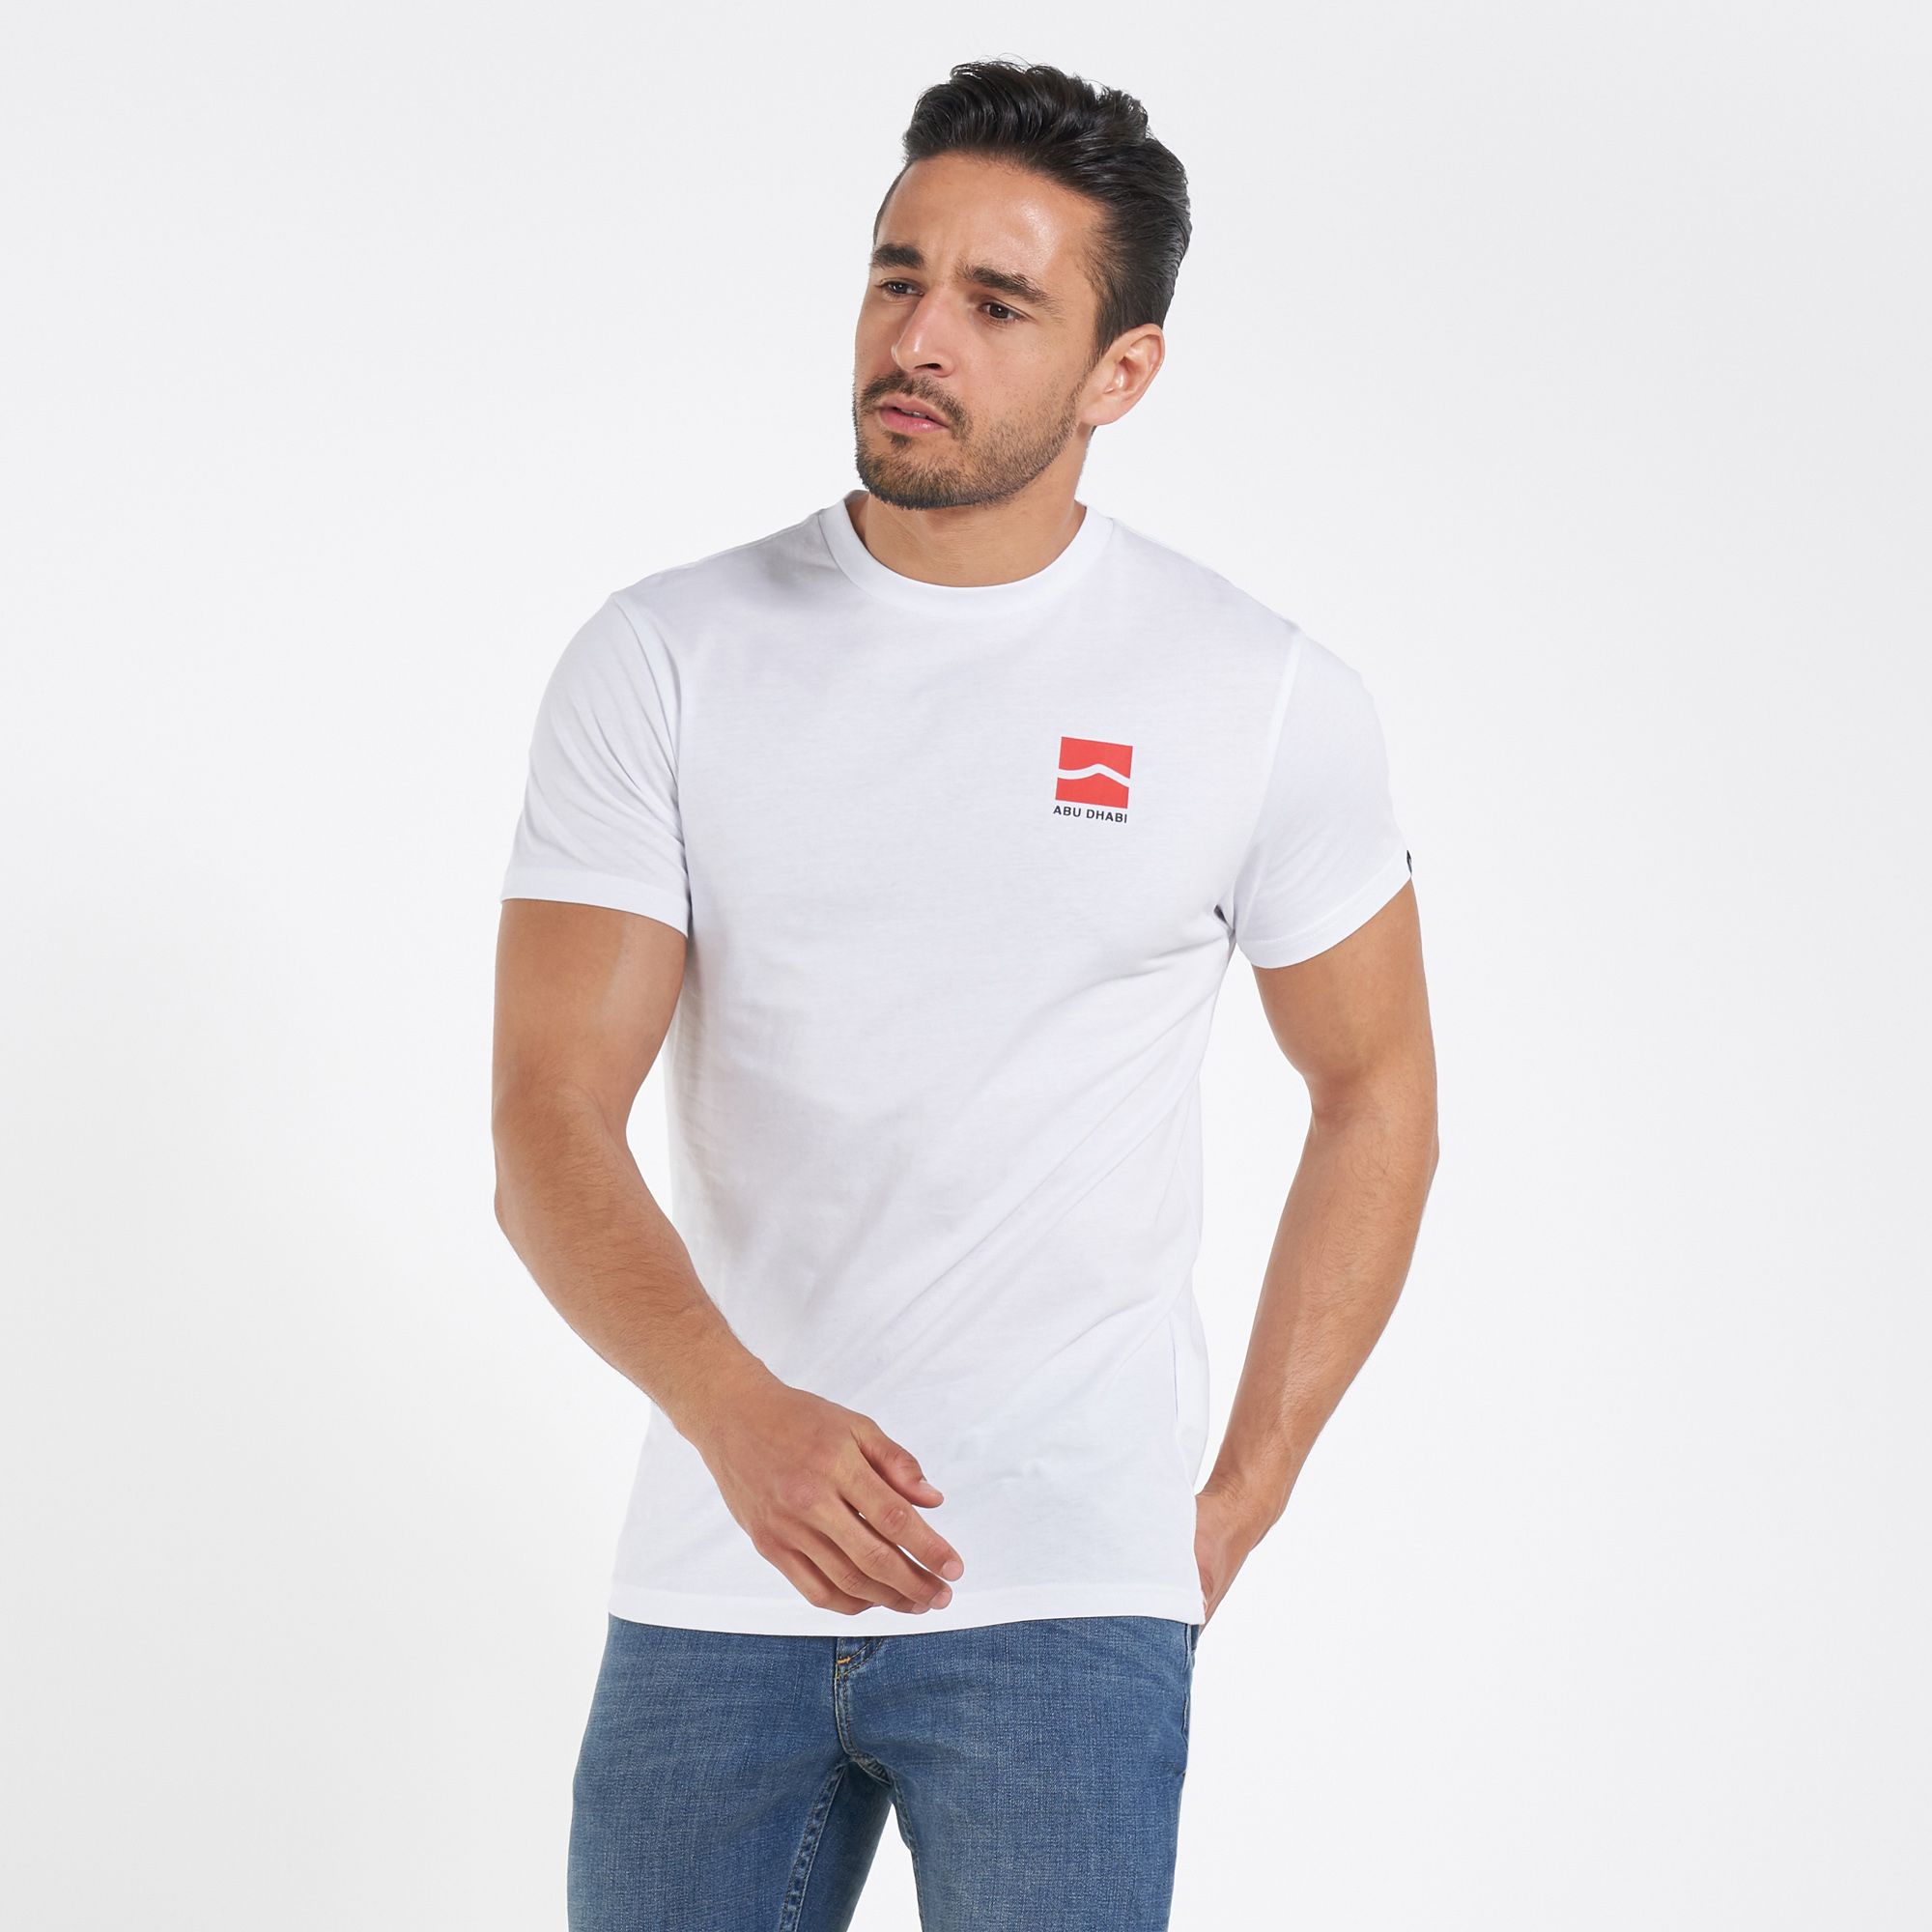 Buy Vans Men's Abu Dhabi City T-Shirt Online in Saudi Arabia | SSS